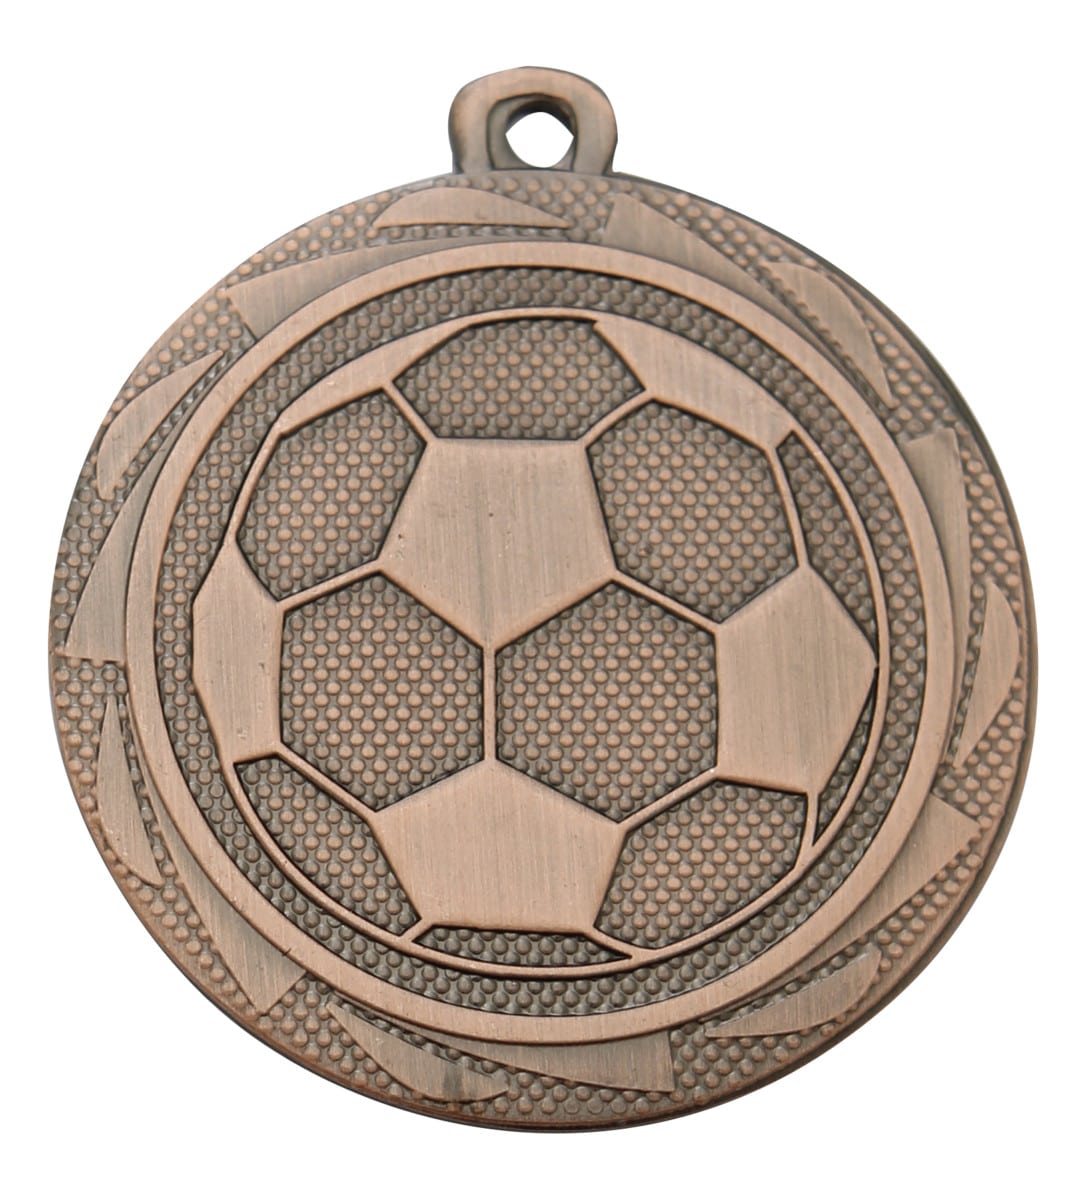 Trophée foot : coupe, médaille foot, récompense football, ruban foot